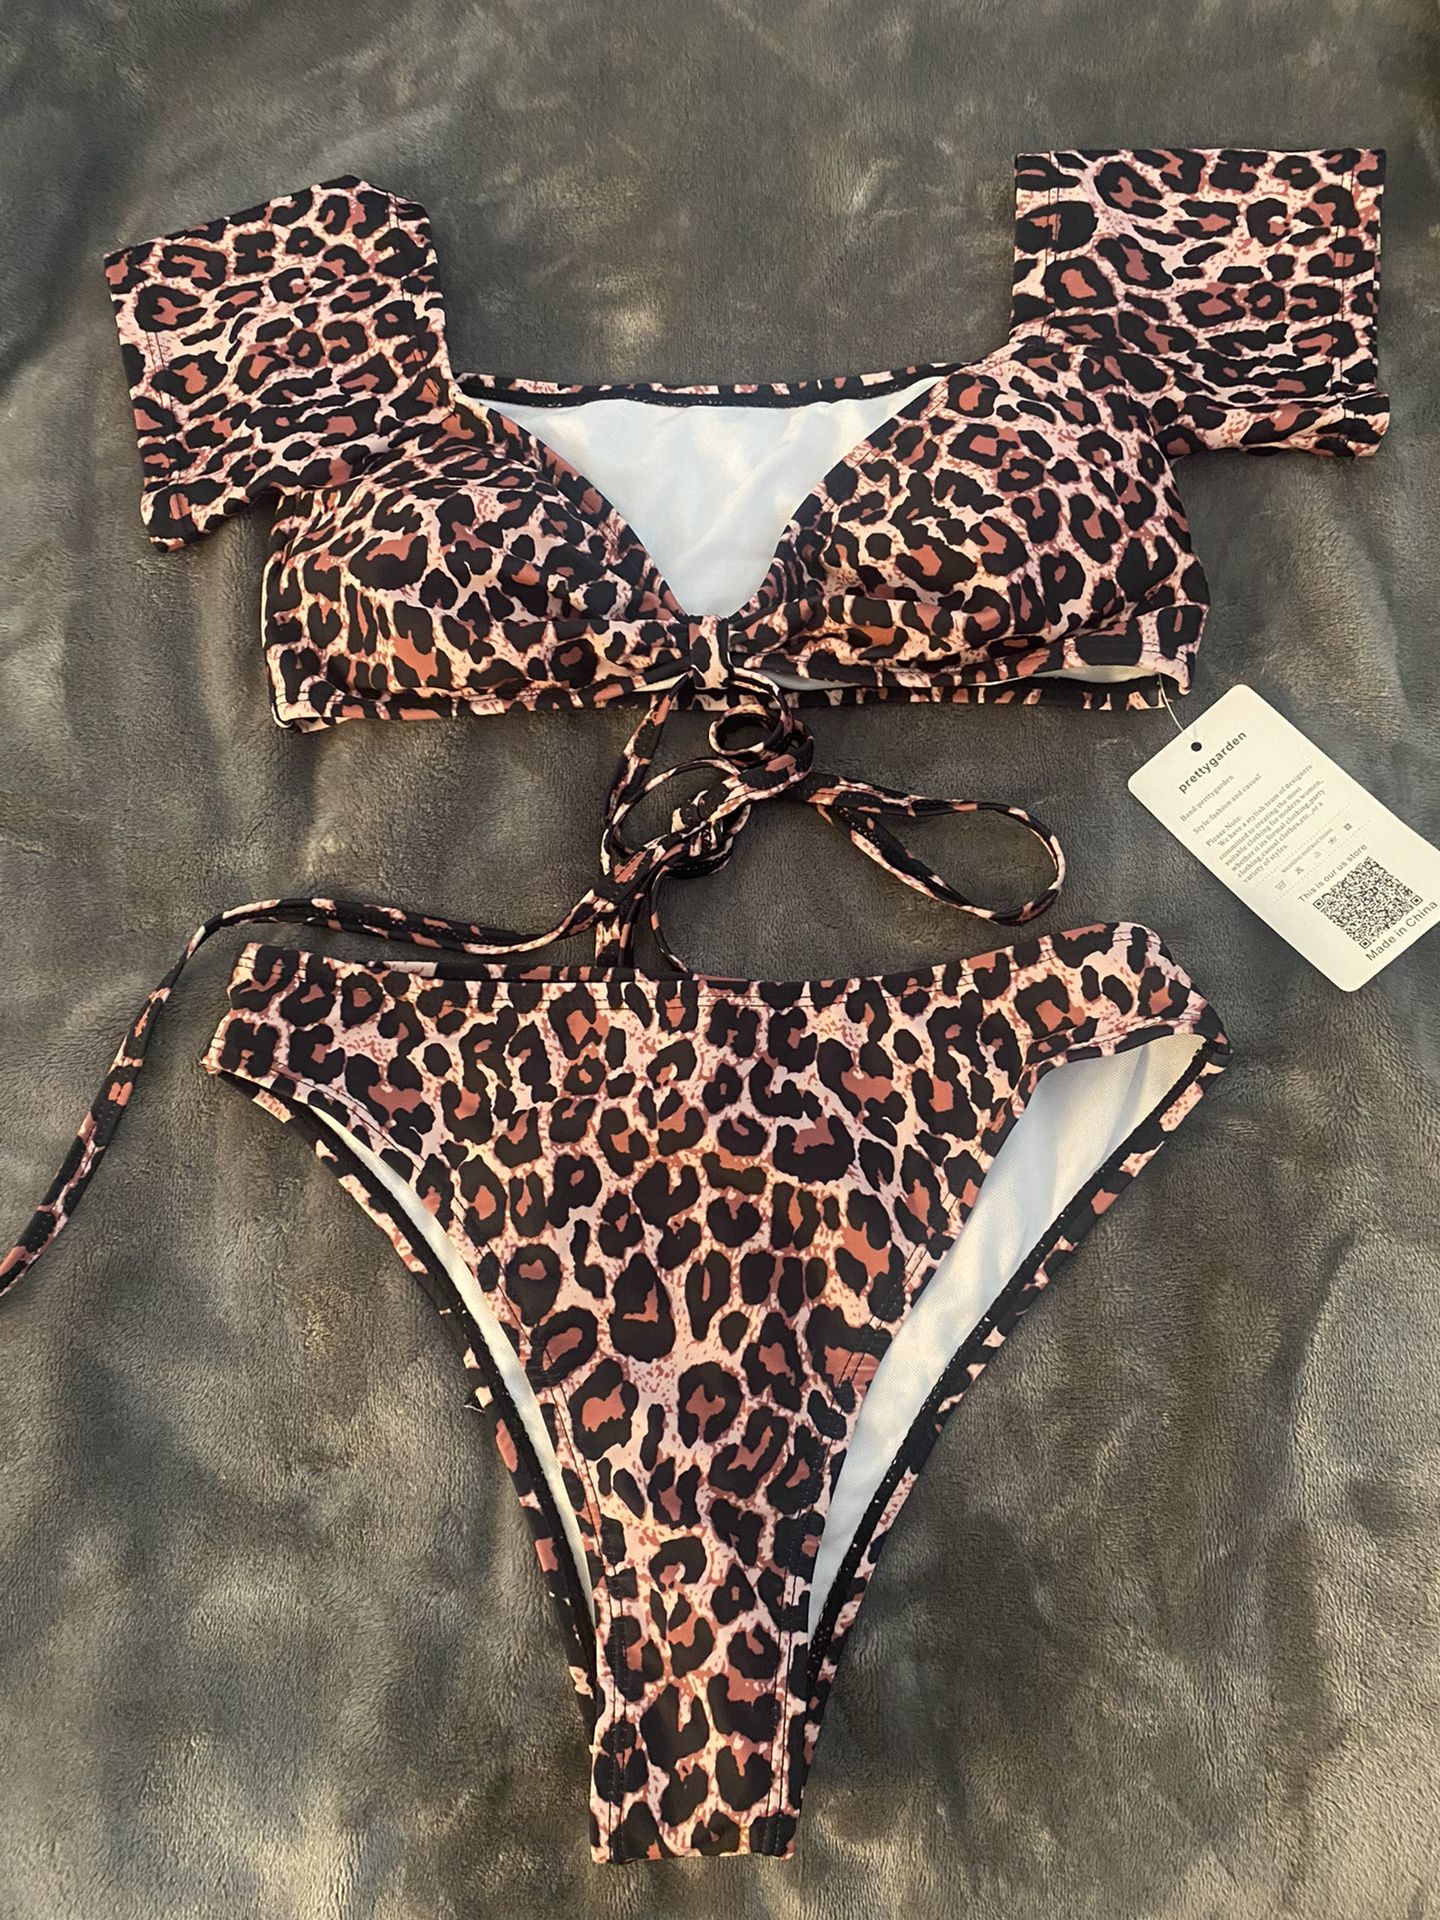 Leopard Print Two-Piece Bikini Set Swimsuit